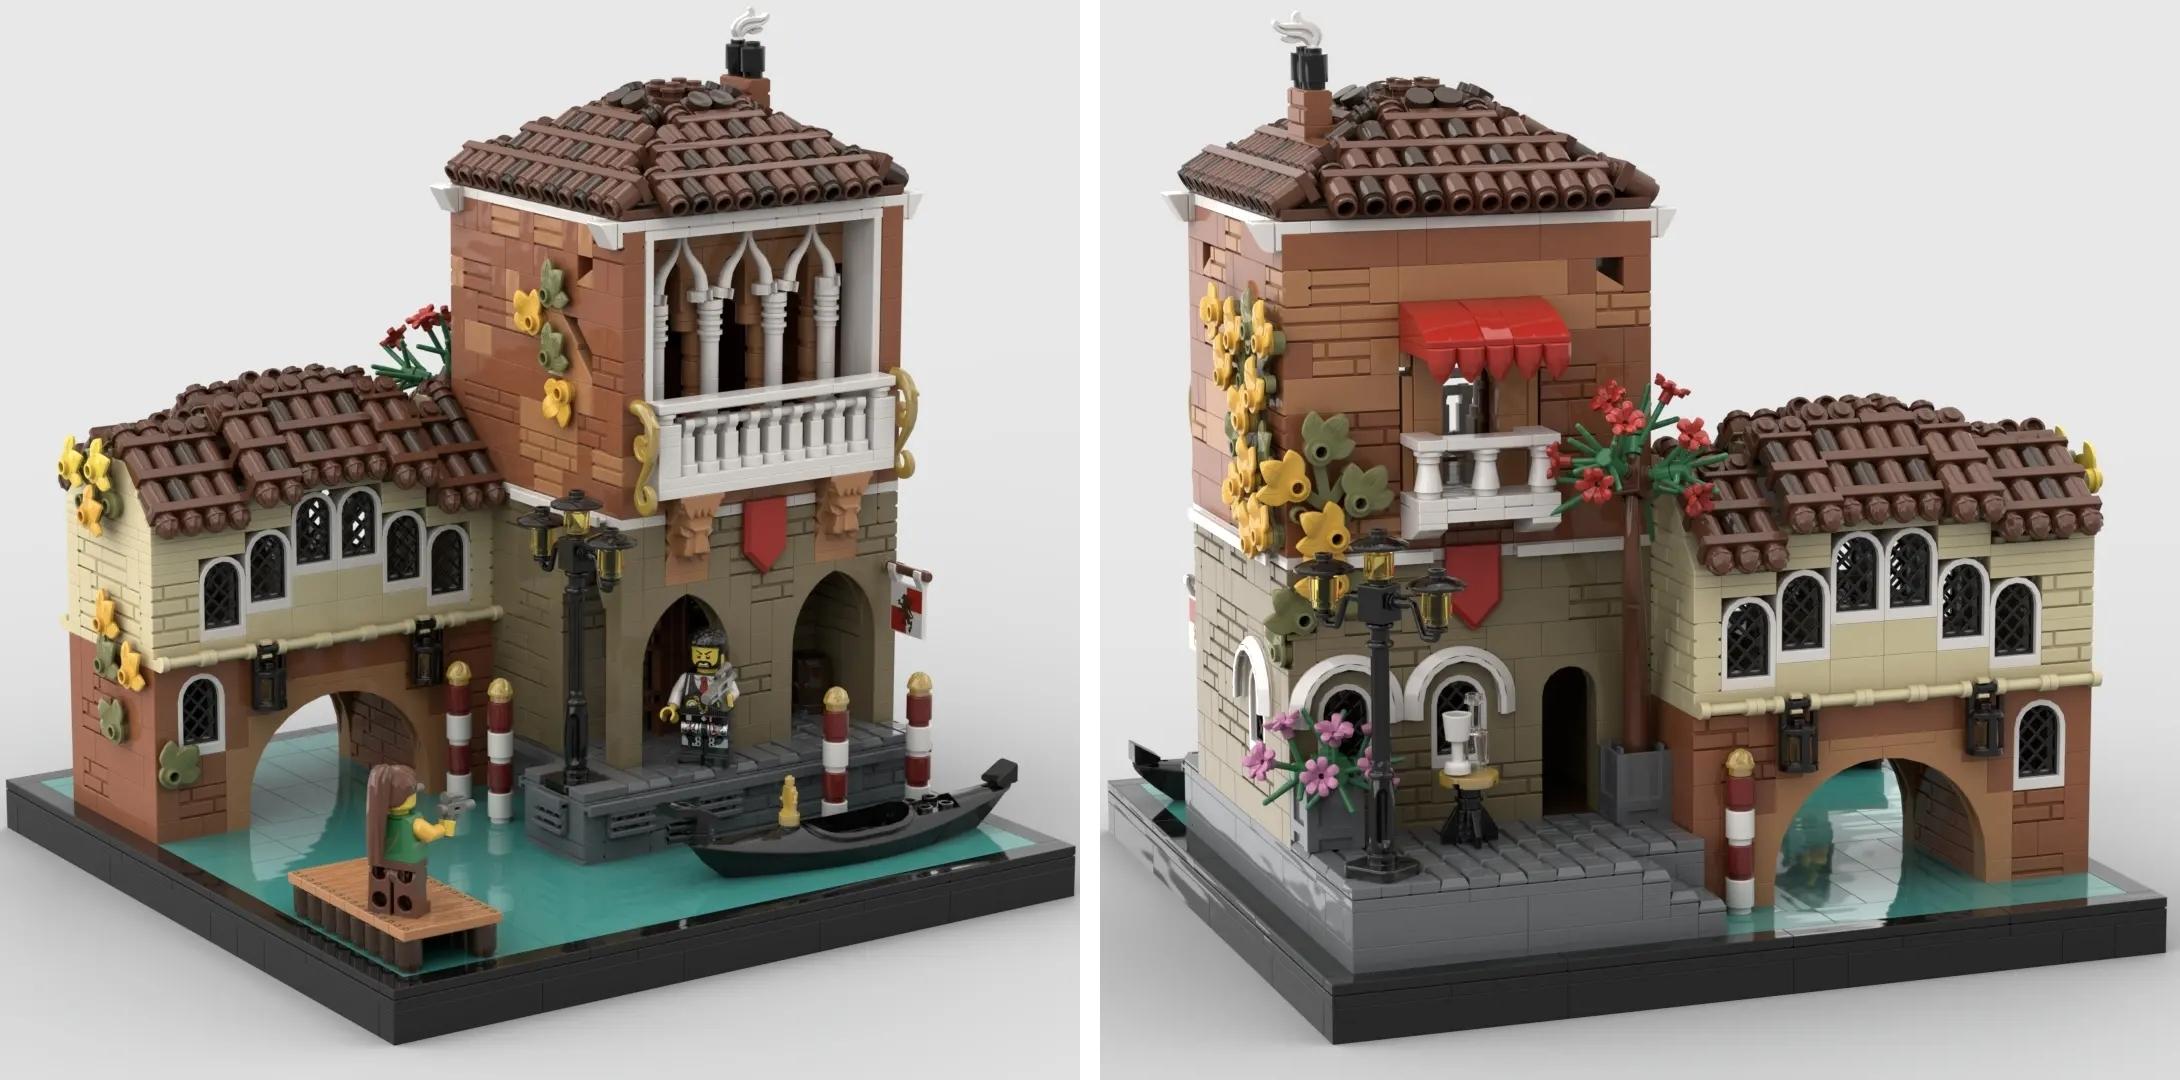 Tomb Raider level sets (Venice) made with LEGO Bricklink Studio.